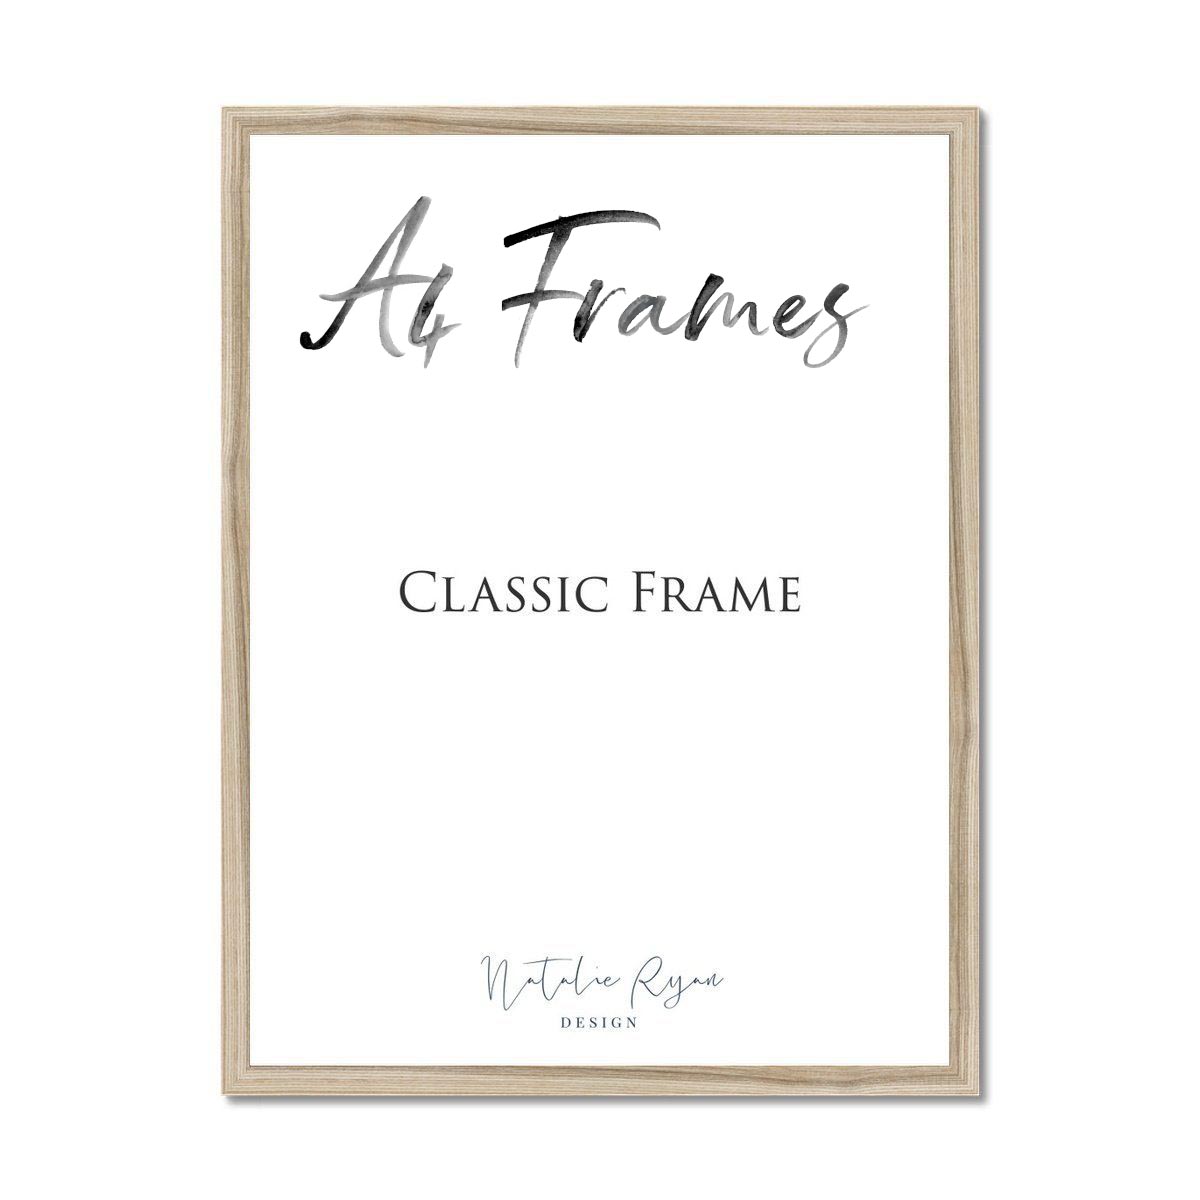 A4 Art Frame for your artwork